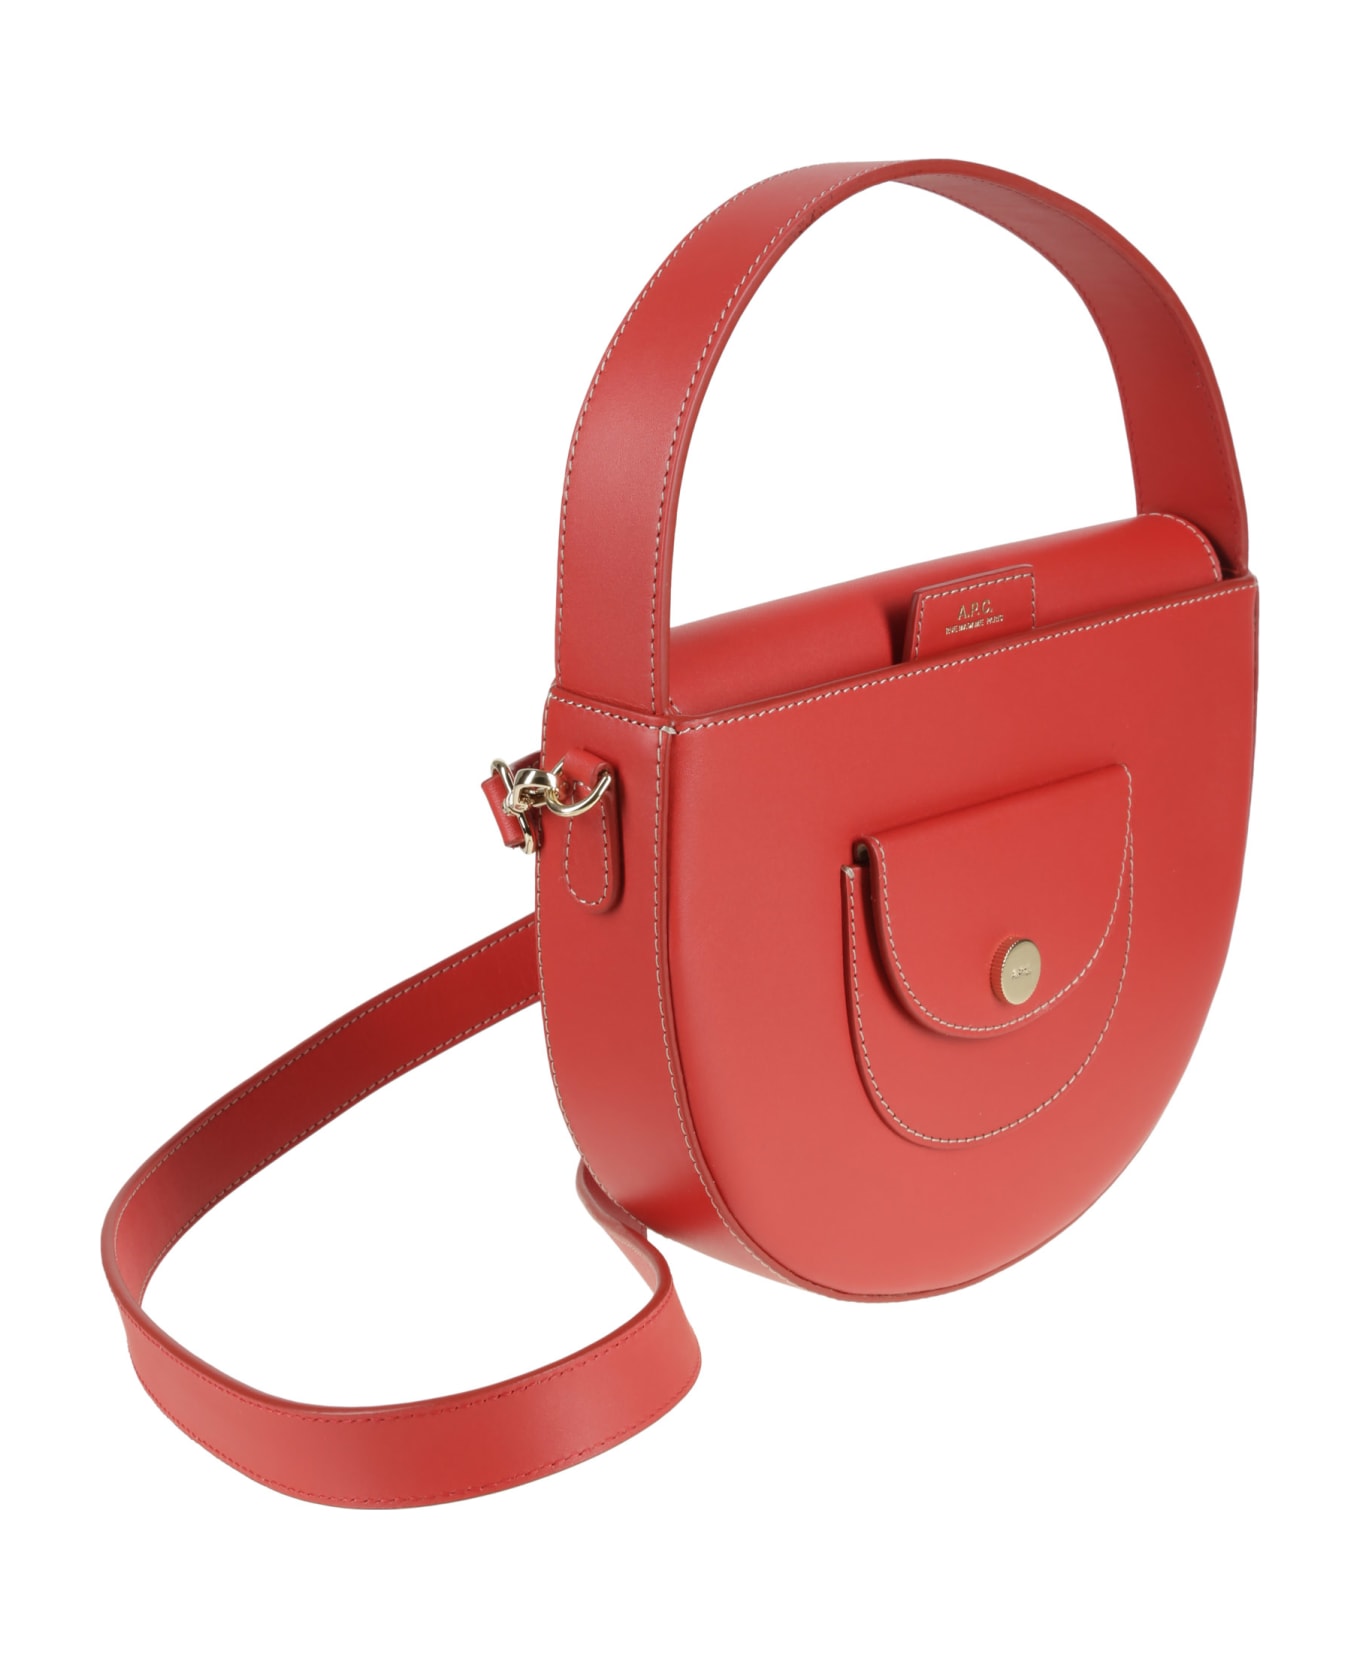 A.P.C. Sac Pocket Handbag - Gaa Red トートバッグ